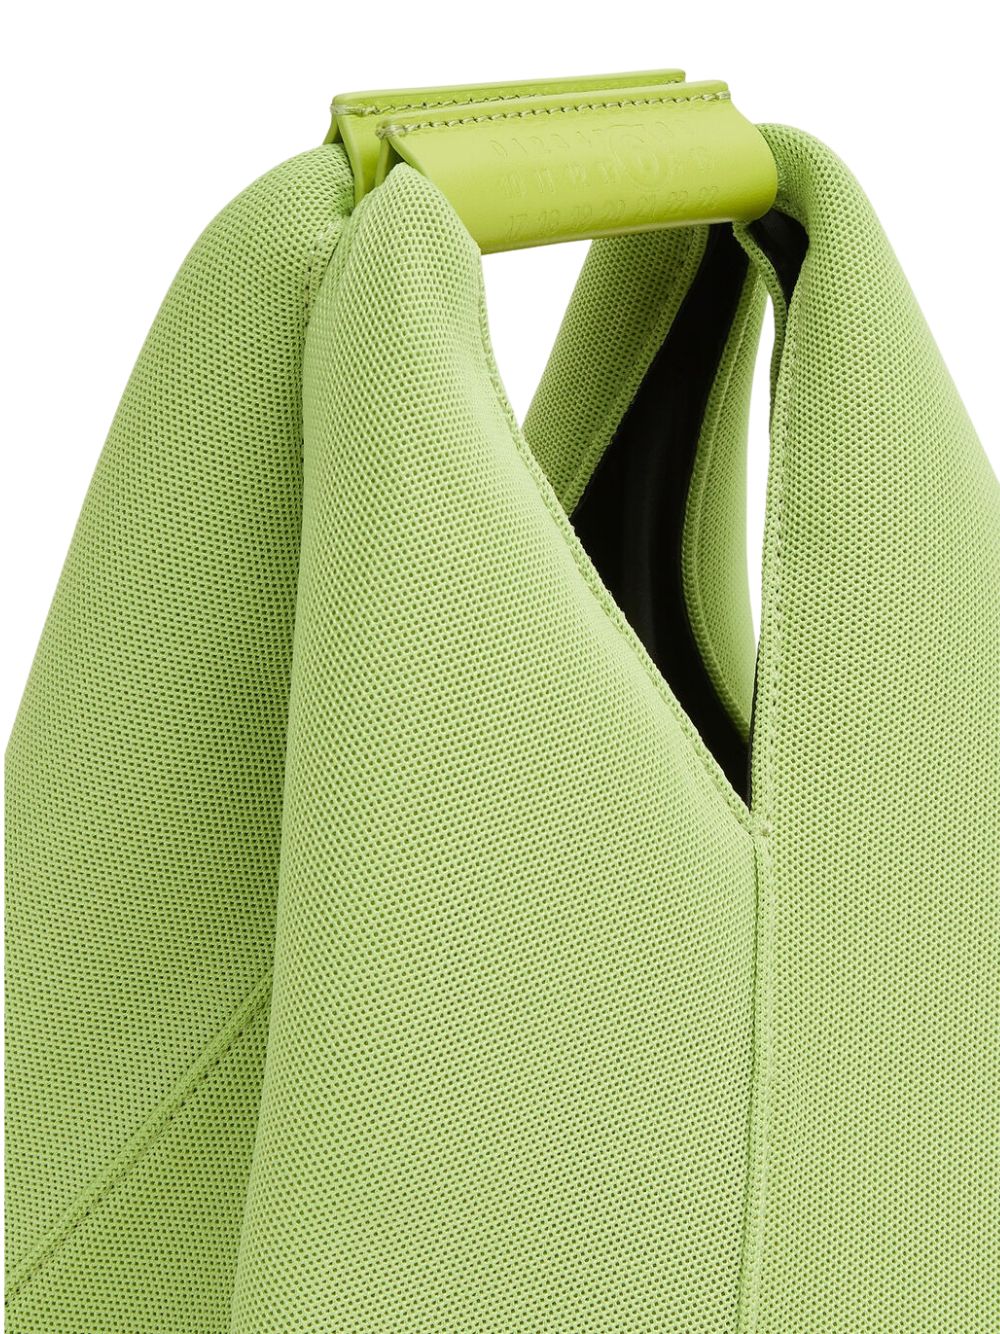 Japanese Bucket Handbag (Lime Green)